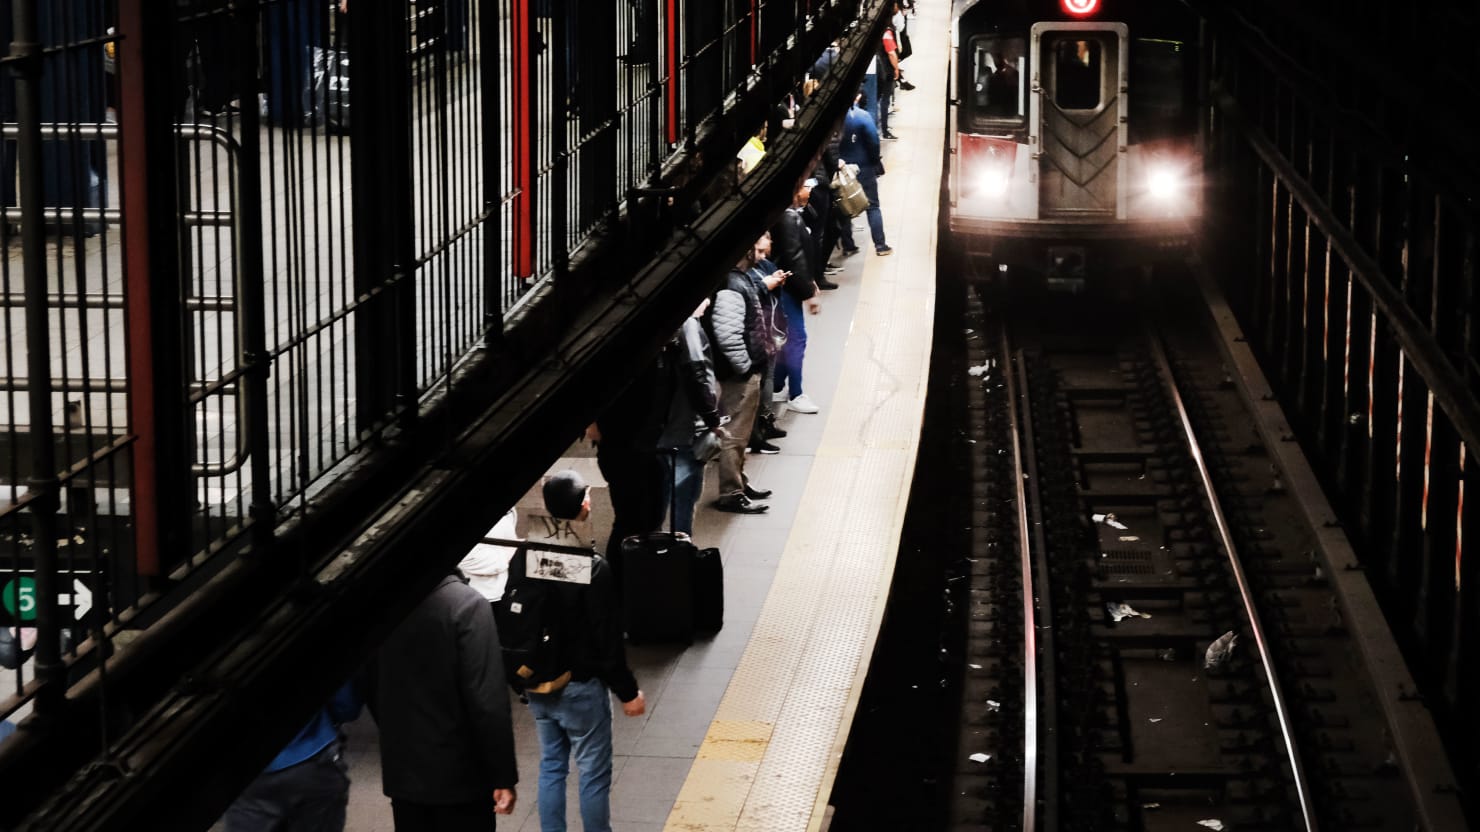 Police Nab Suspect in Deadly NYC Subway Stabbing Spree